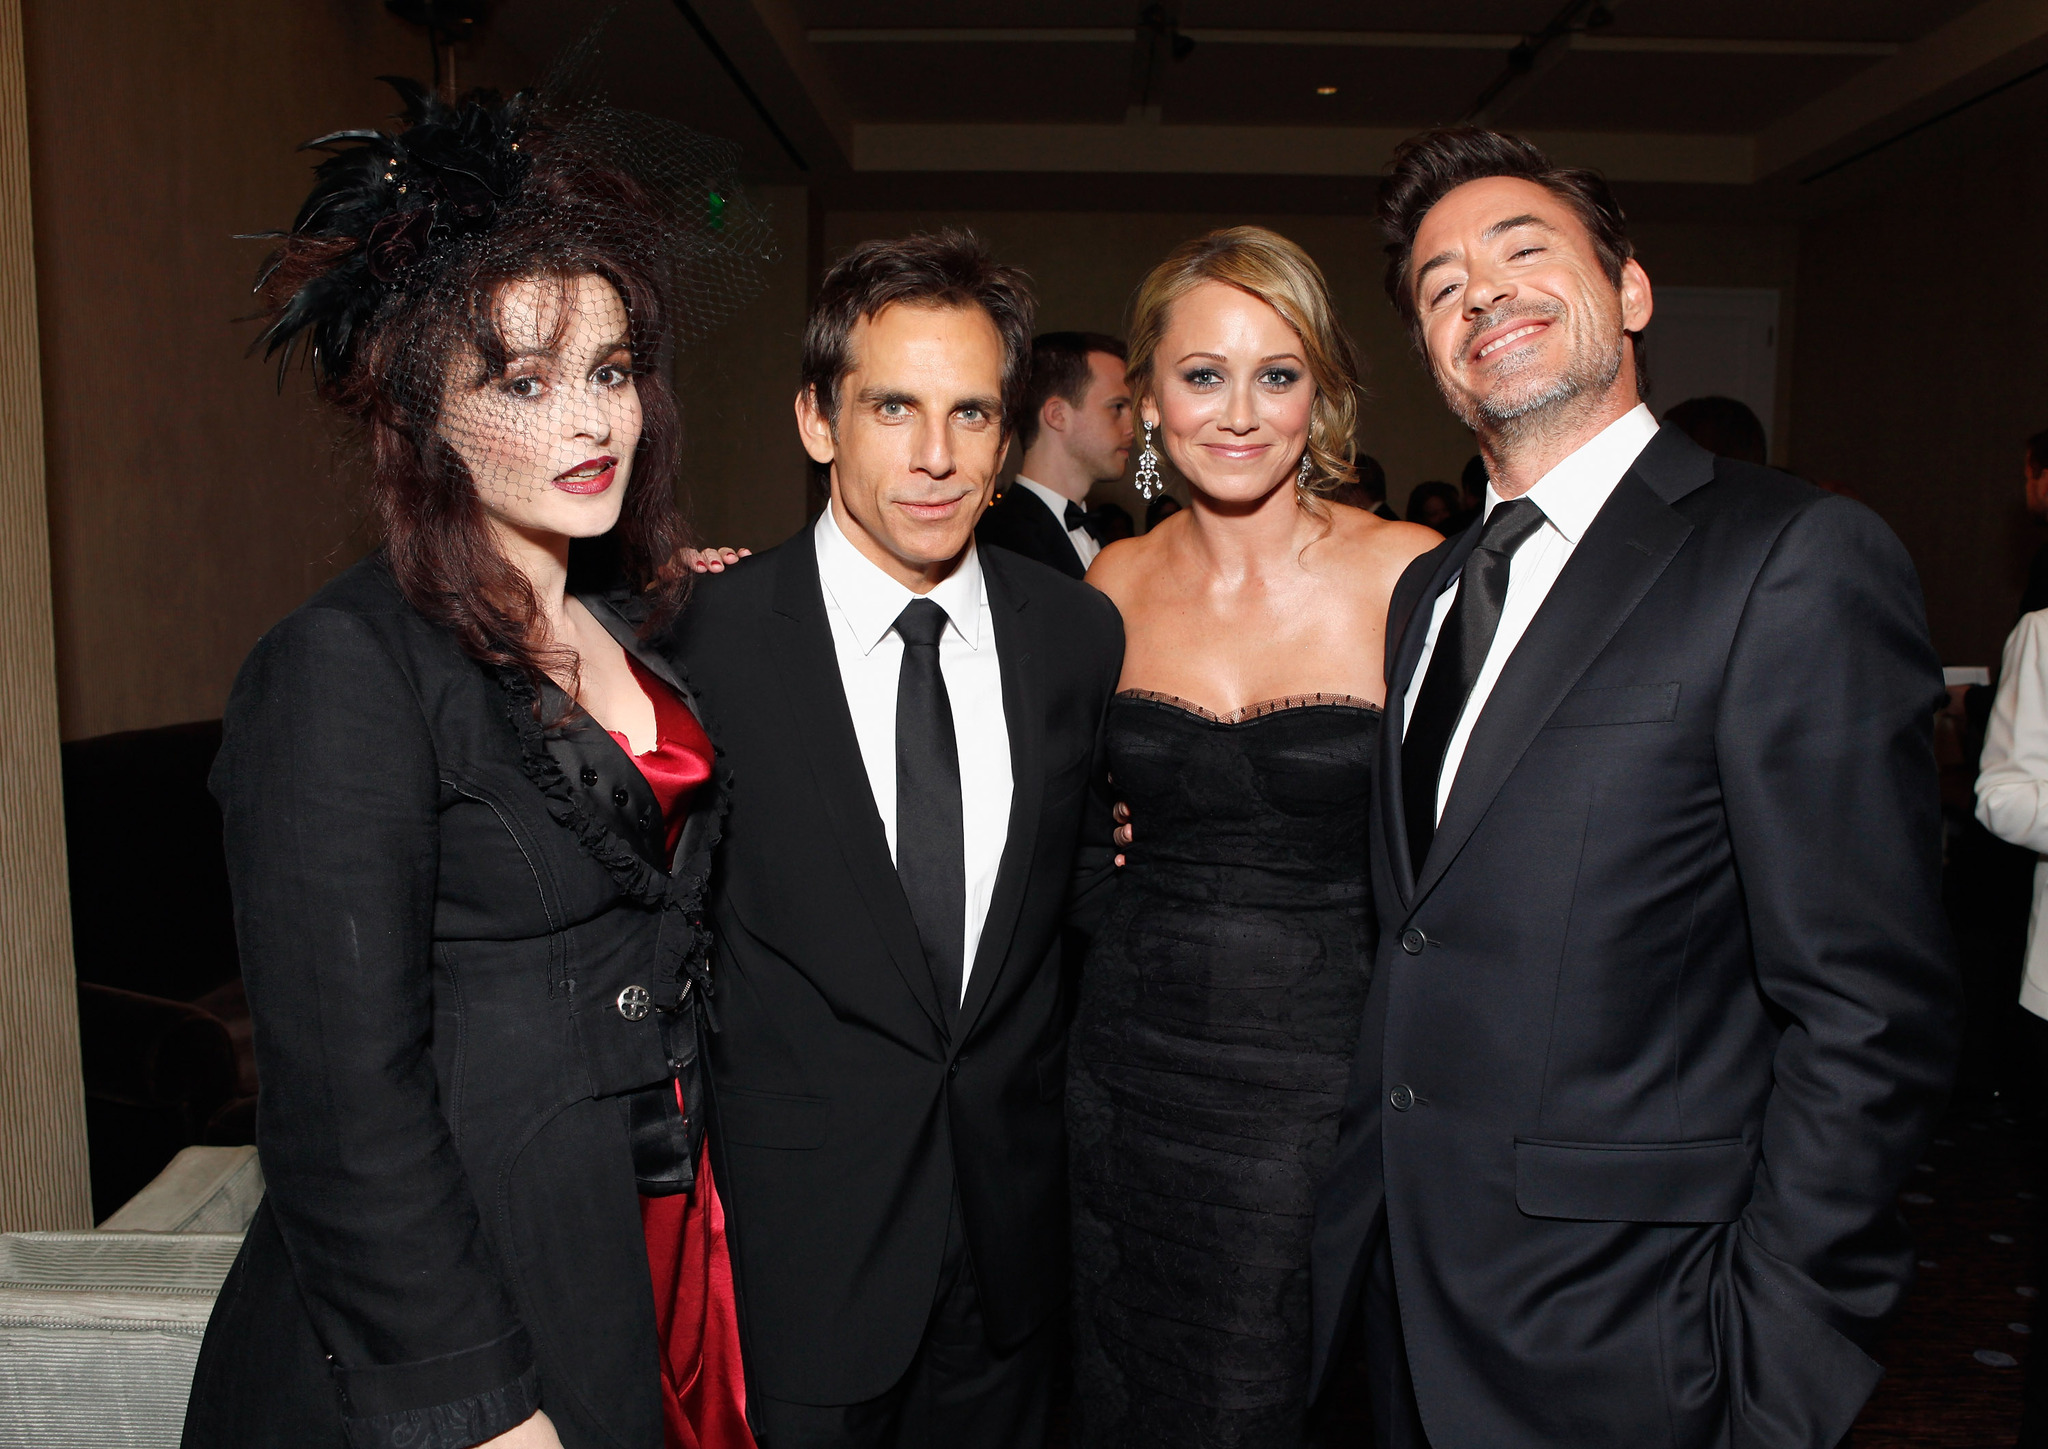 Helena Bonham Carter, Robert Downey Jr., Ben Stiller and Christine Taylor